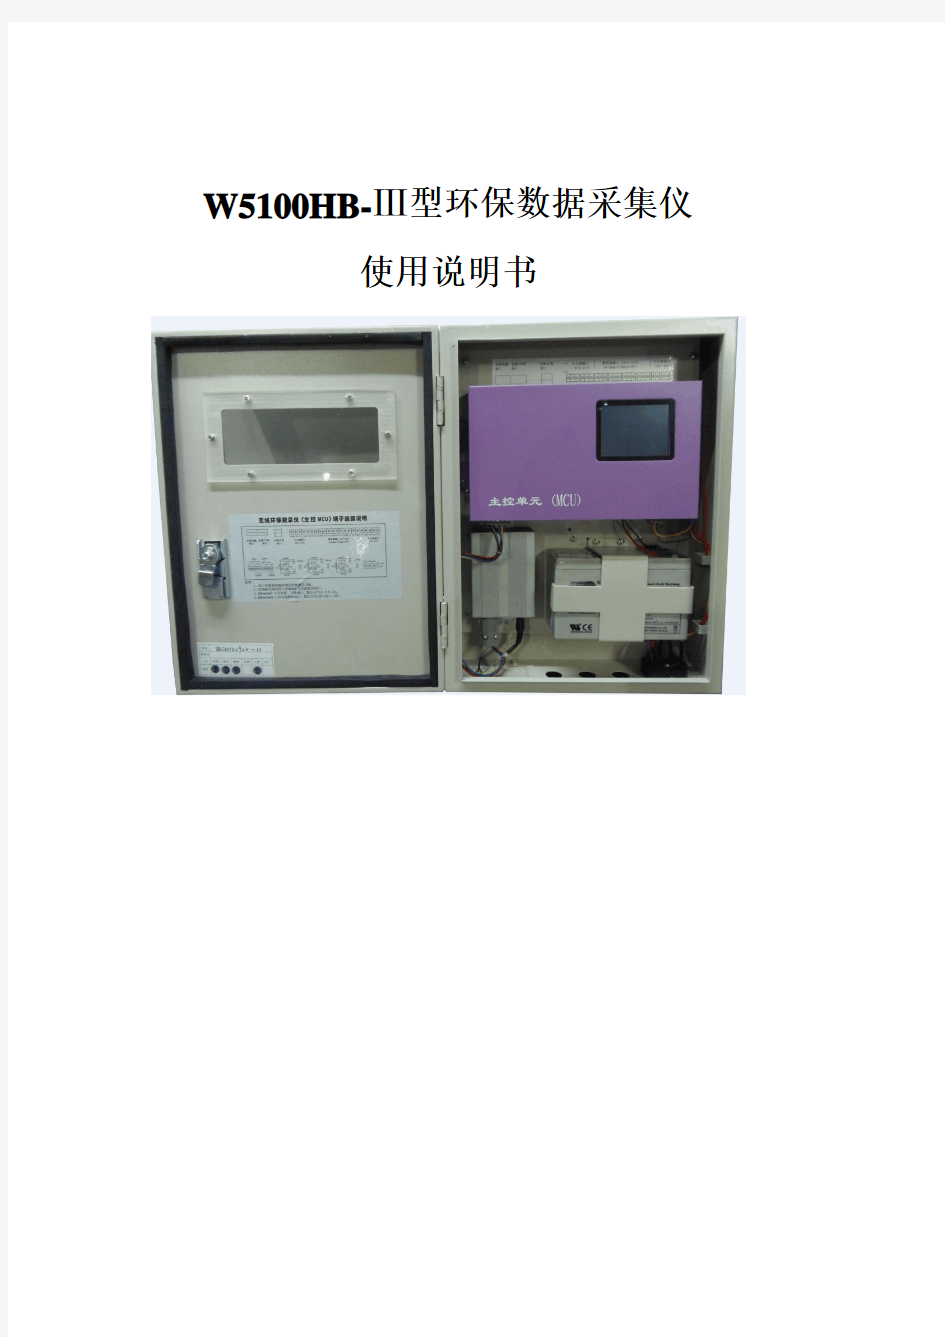 W5100HB-Ⅲ型环保数采仪使用手册V1.0